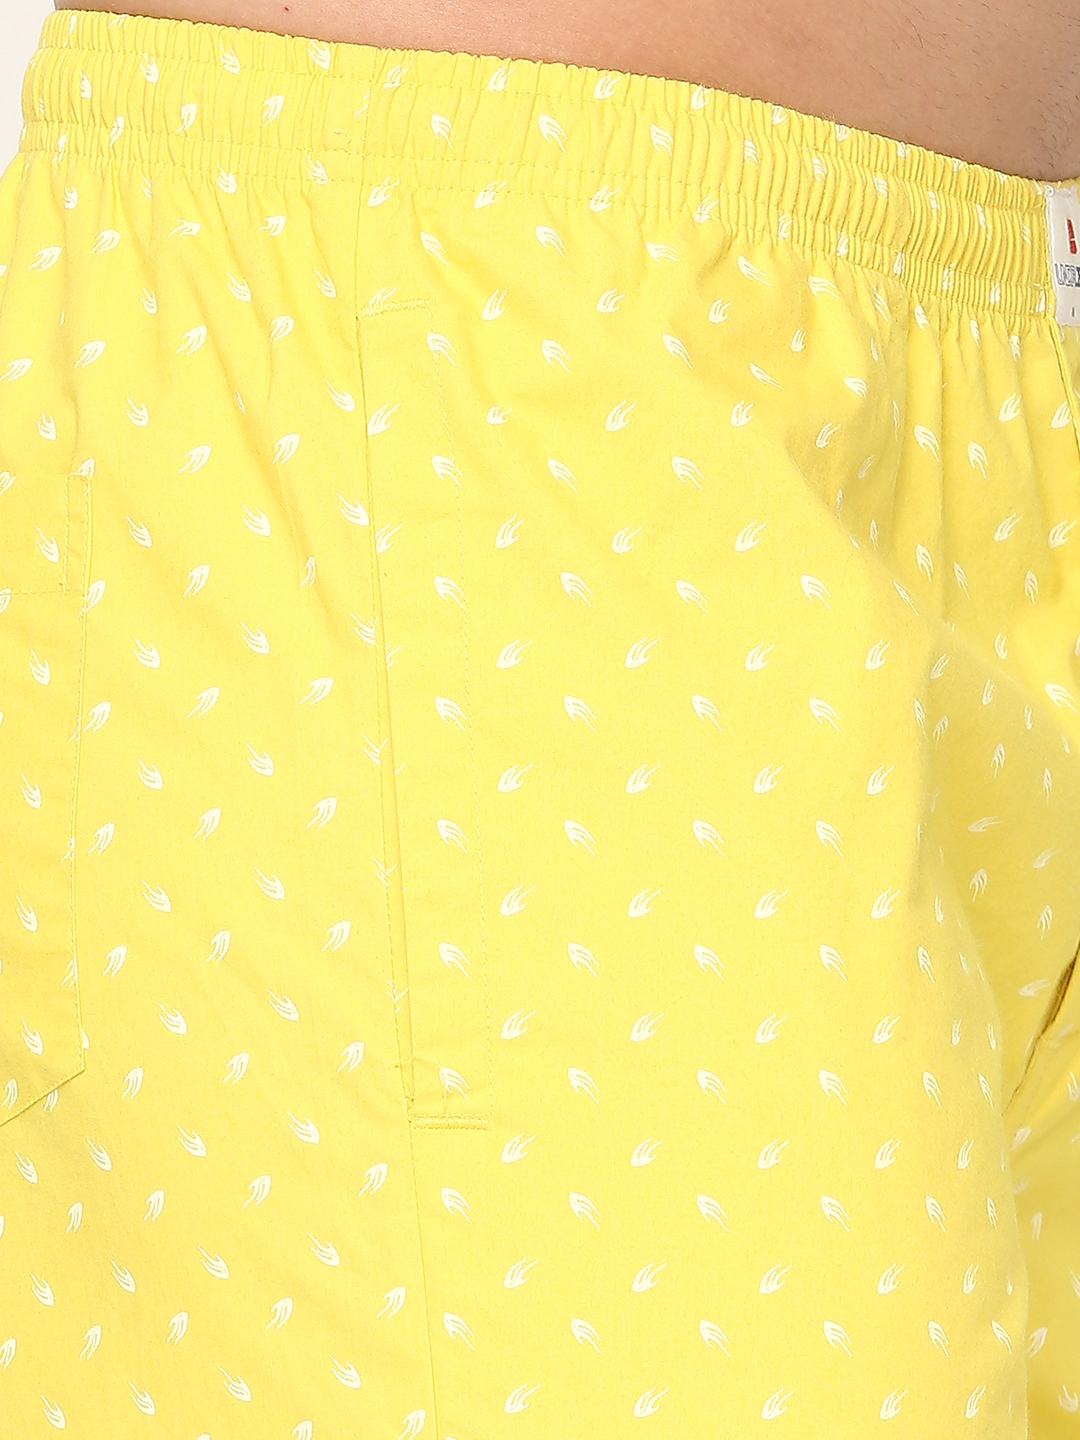 Underjeans by Spykar Premium Cotton Printed Men Yellow Pyjama